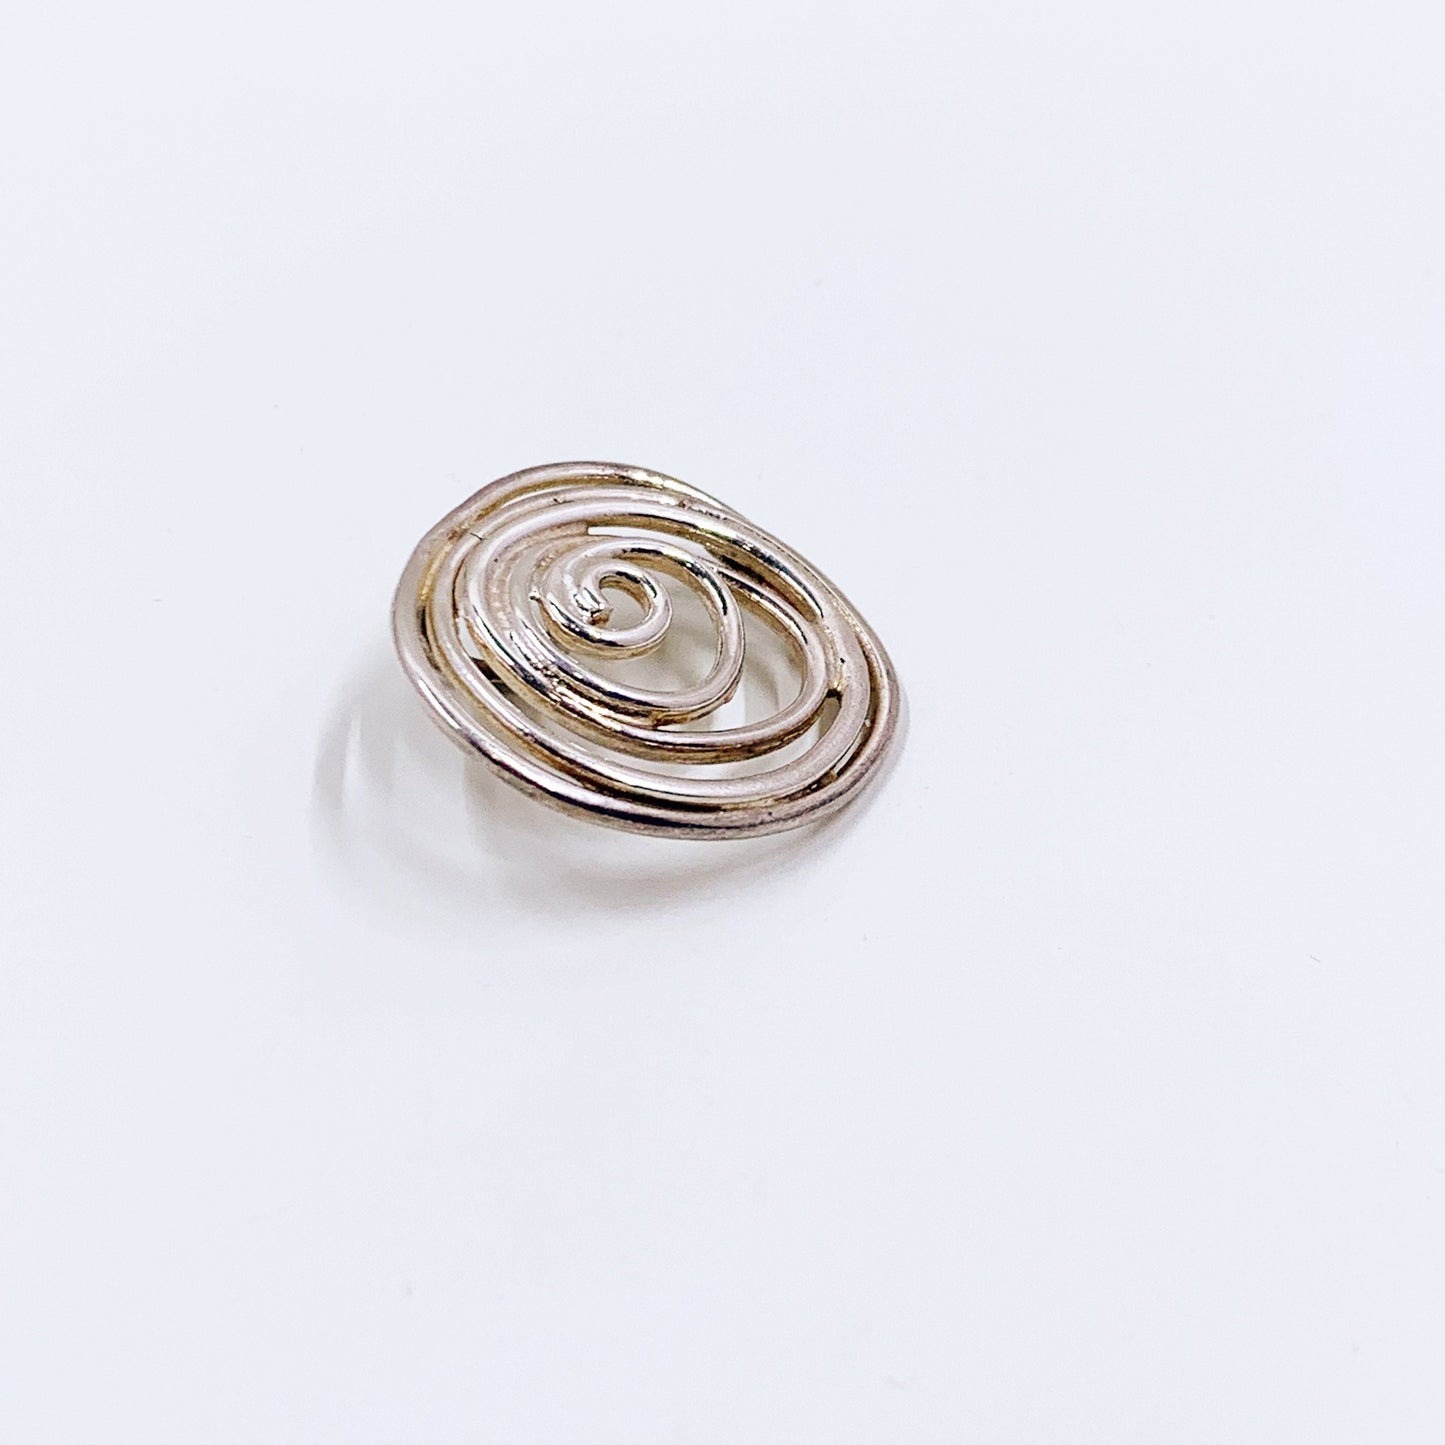 Vintage Silver Modernist Wire Swirl Pendant | Geometric Swirl Design Pendant